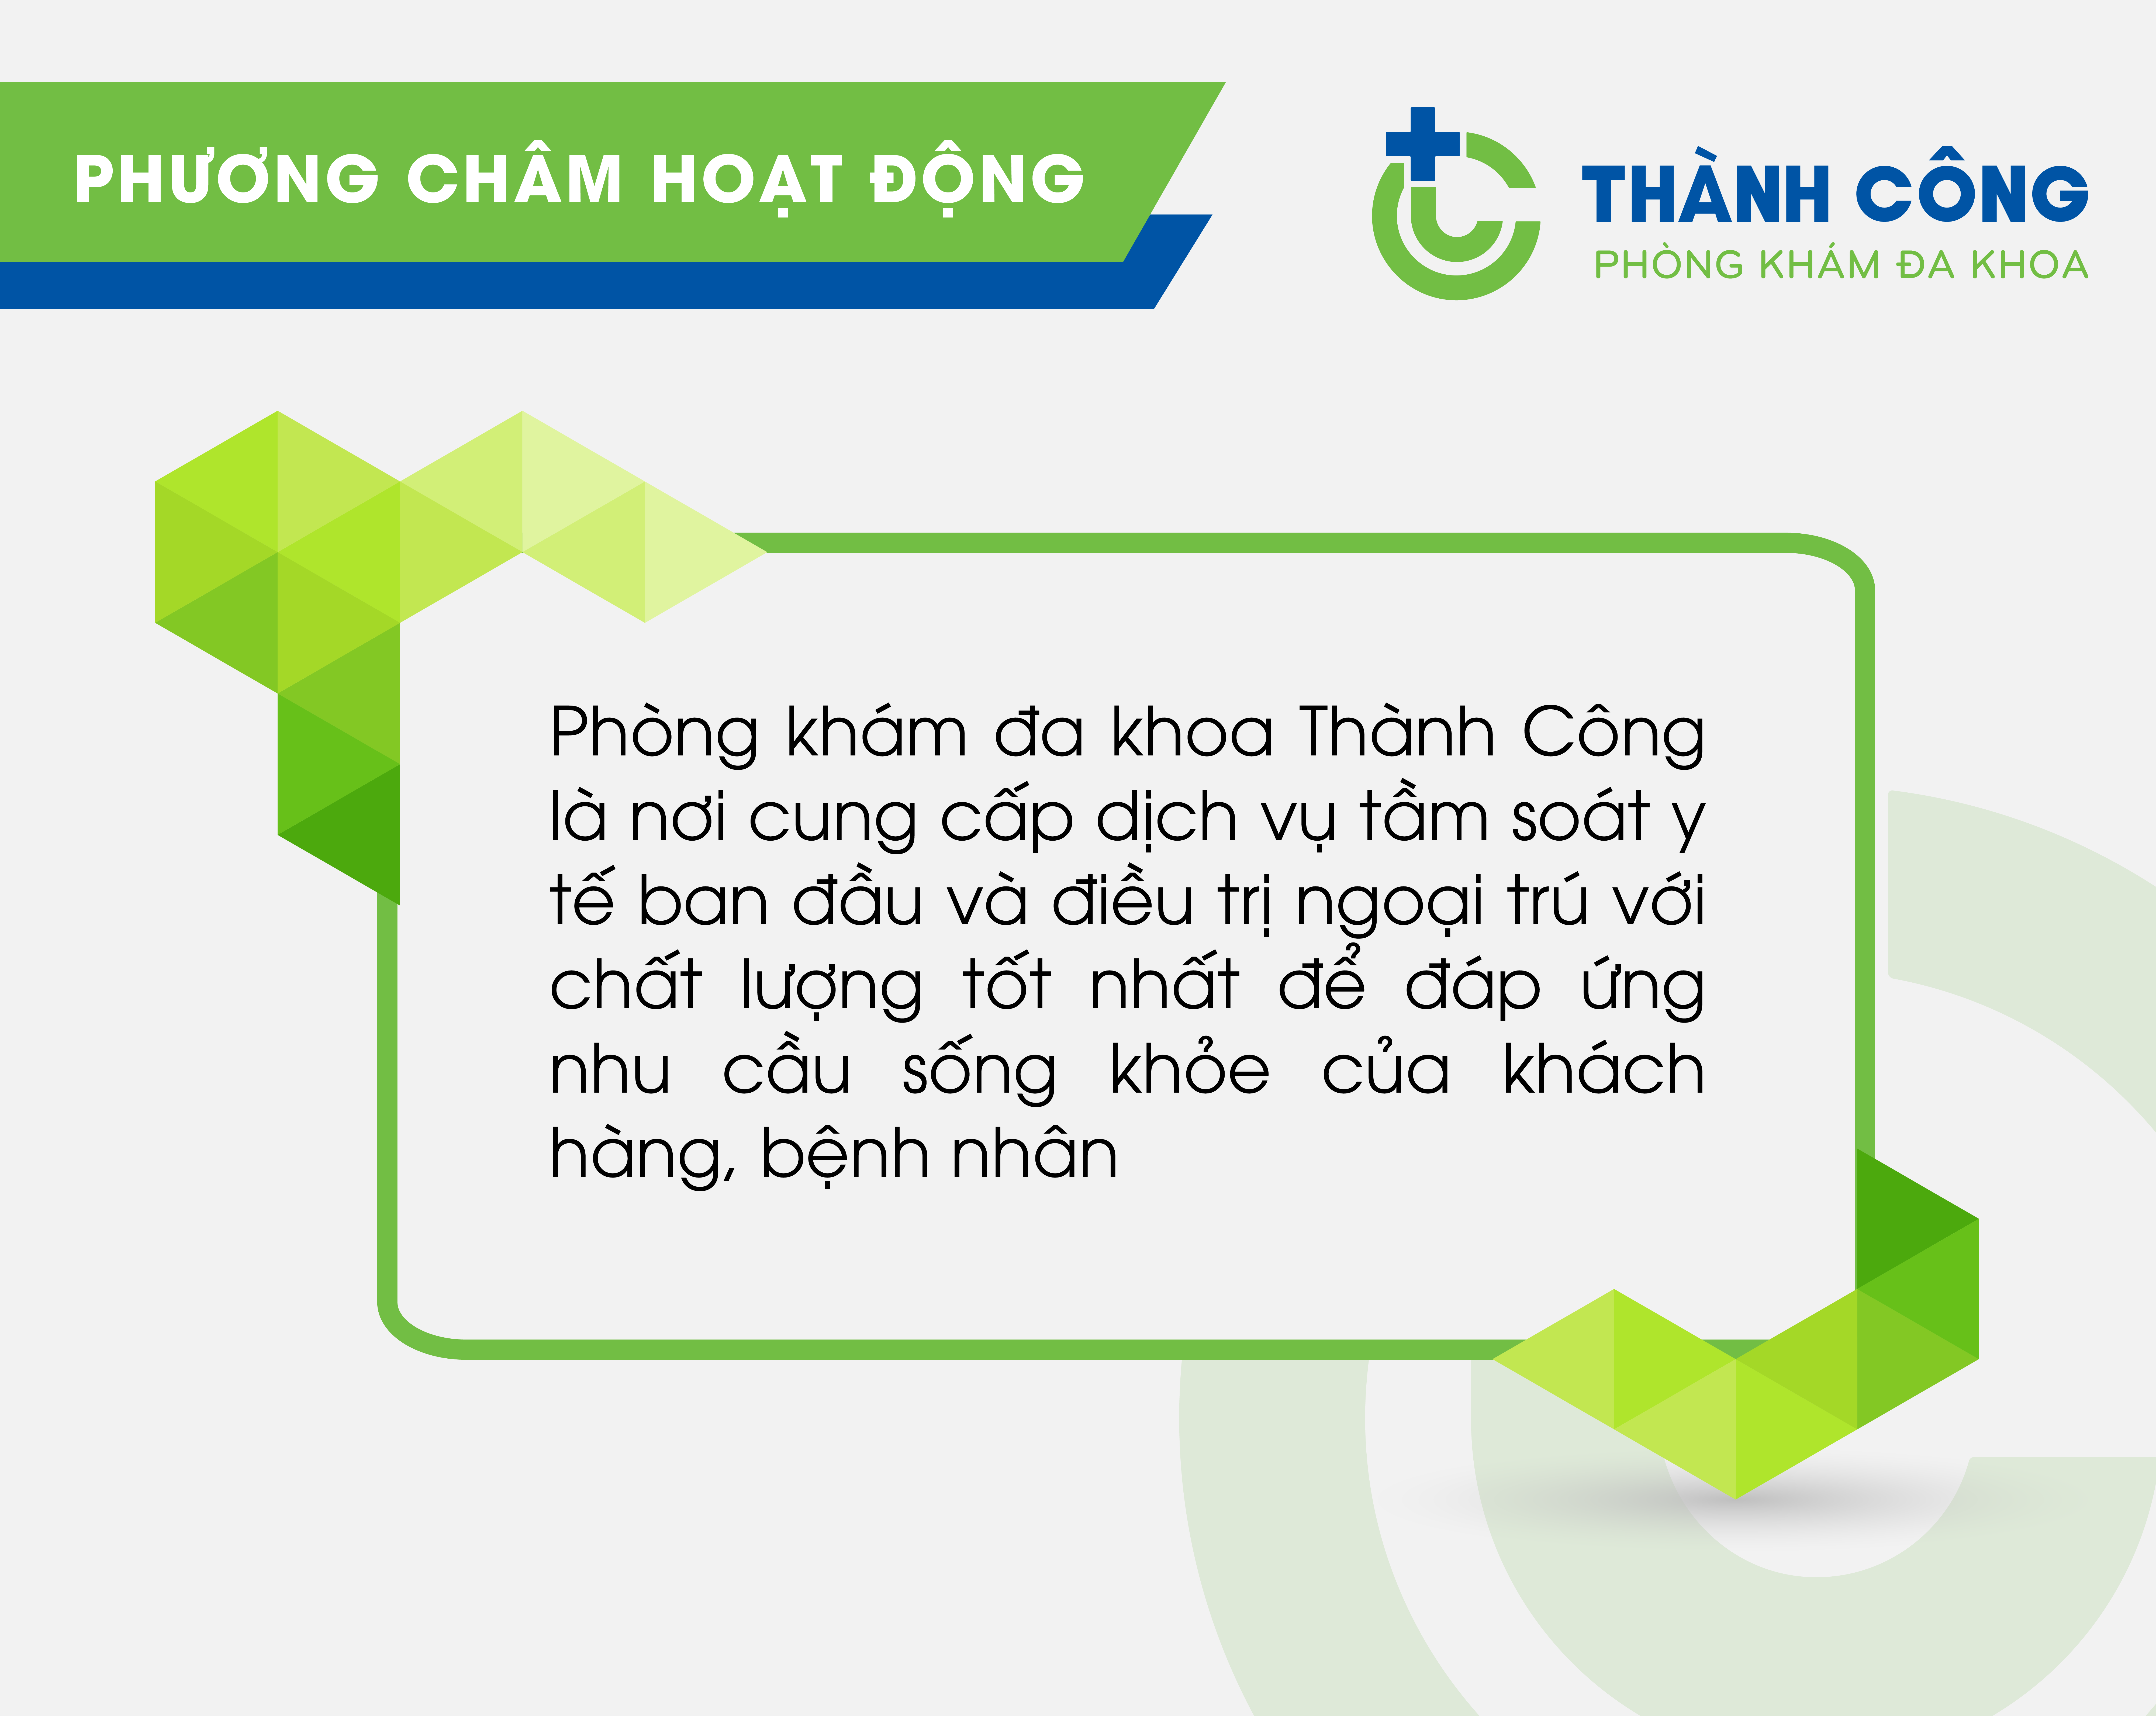 Phuong cham hoat dong